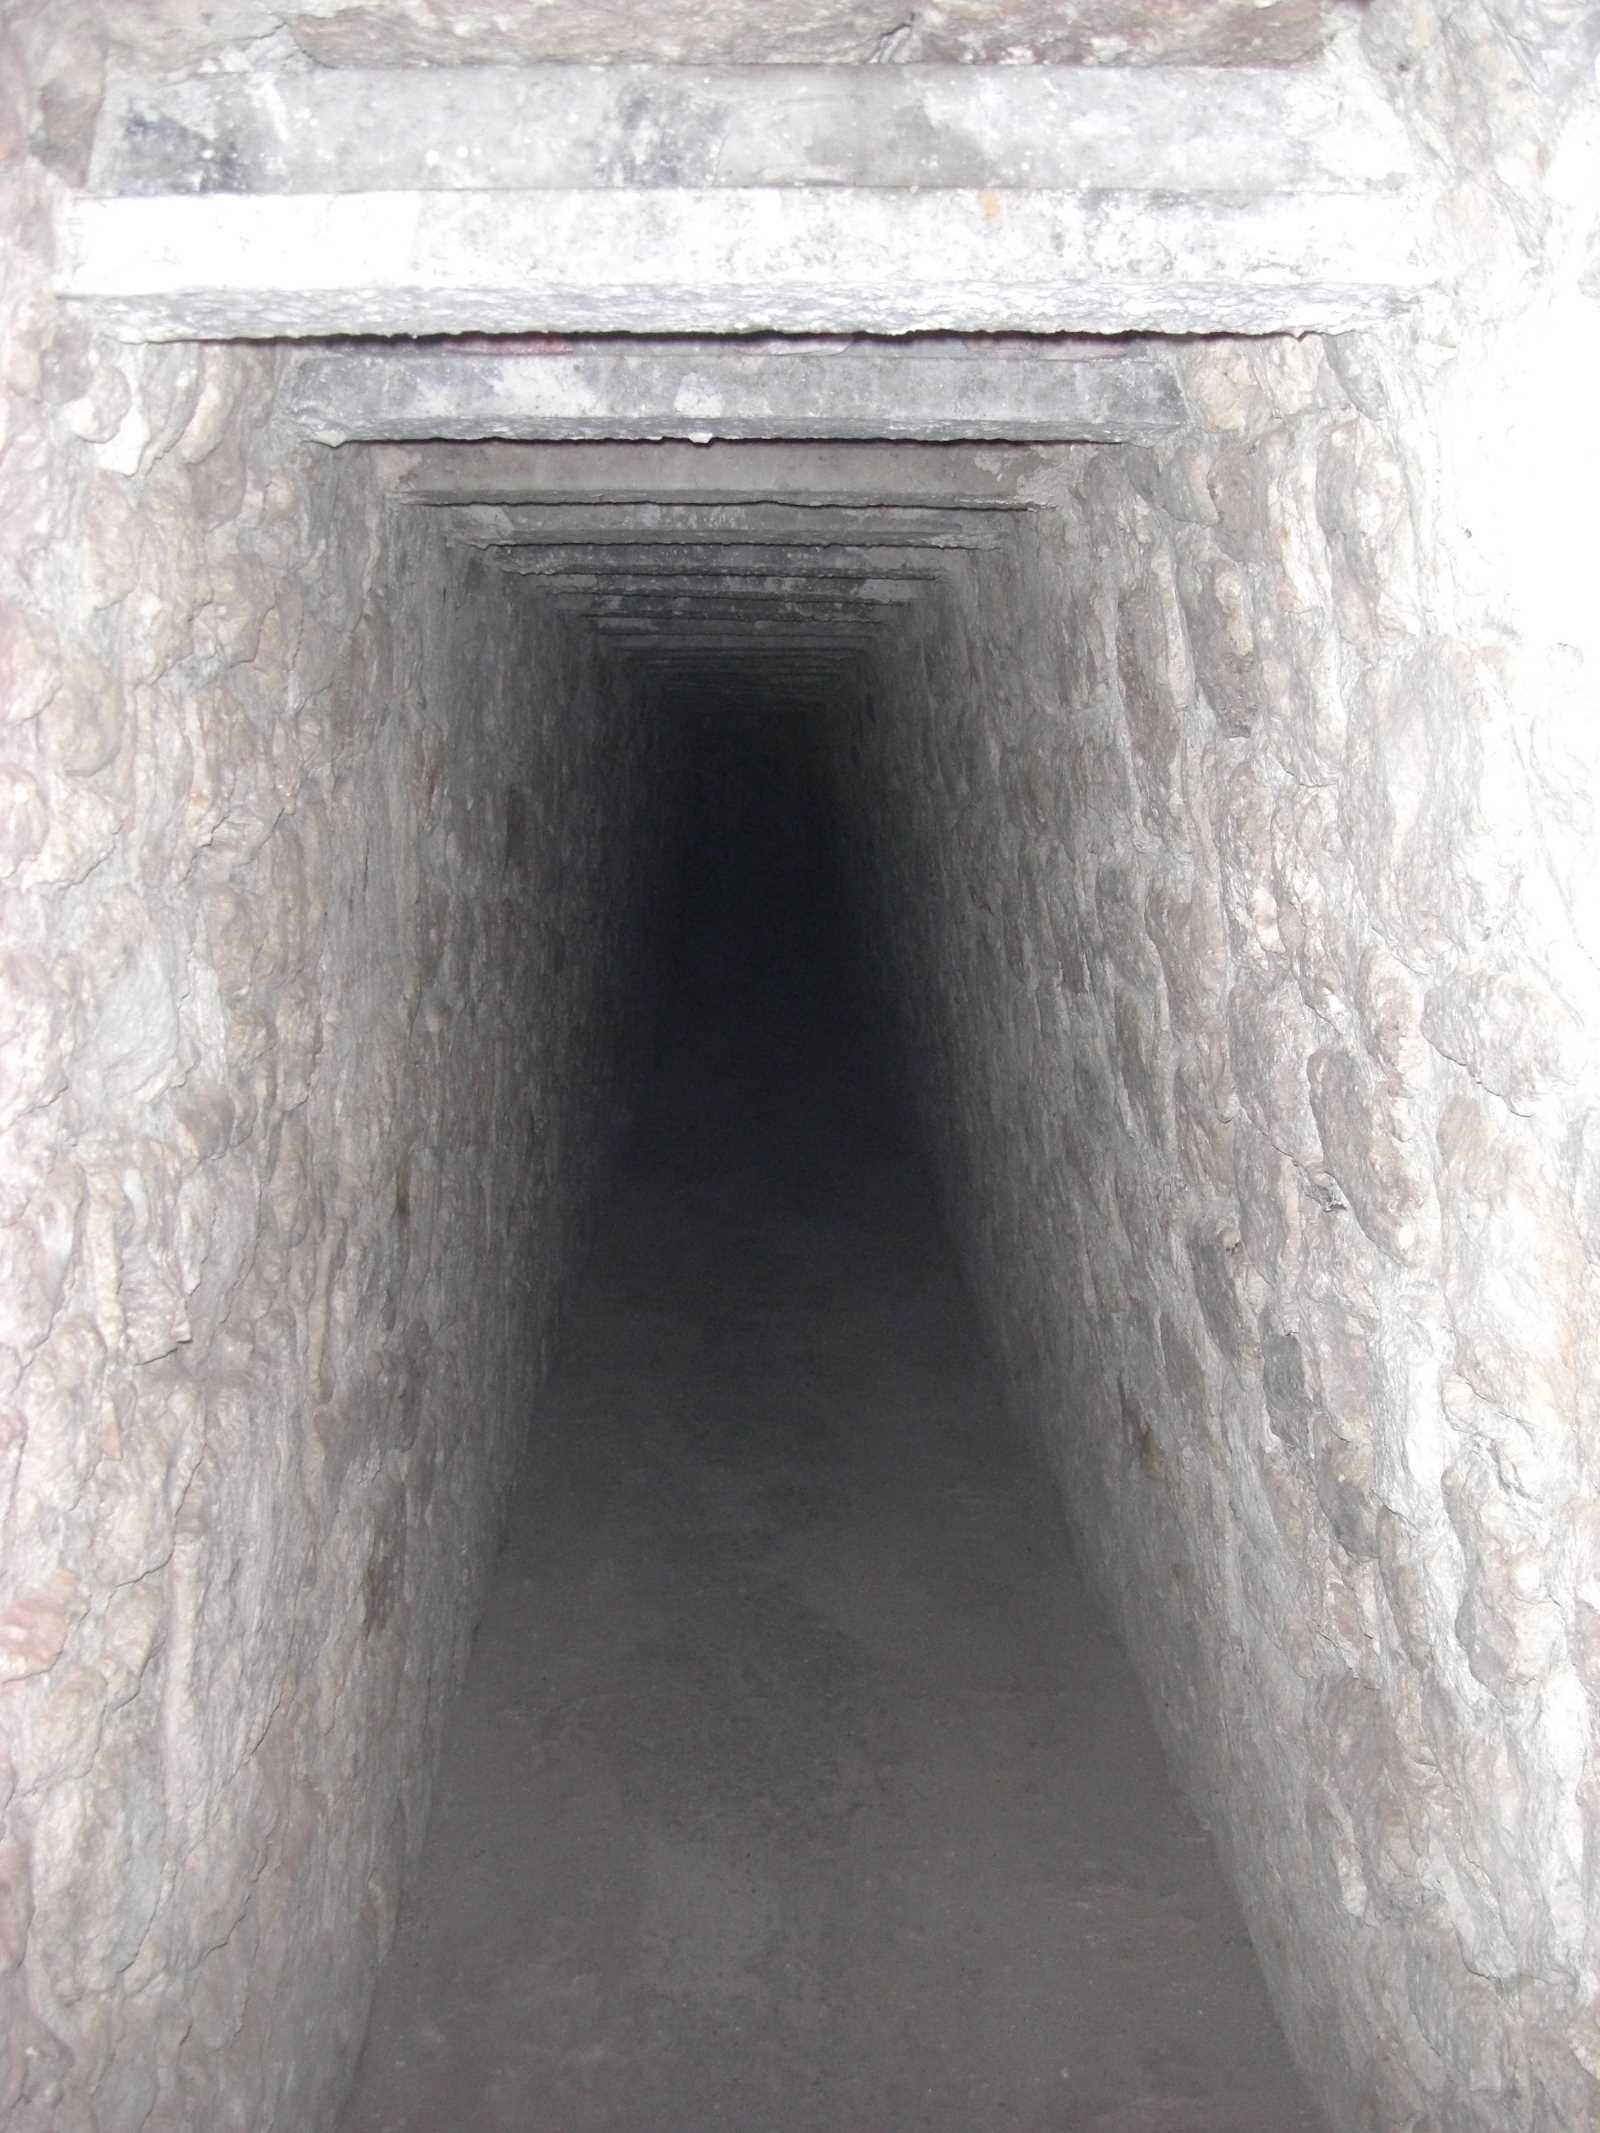 CIMG11
43 inside the tunnel
